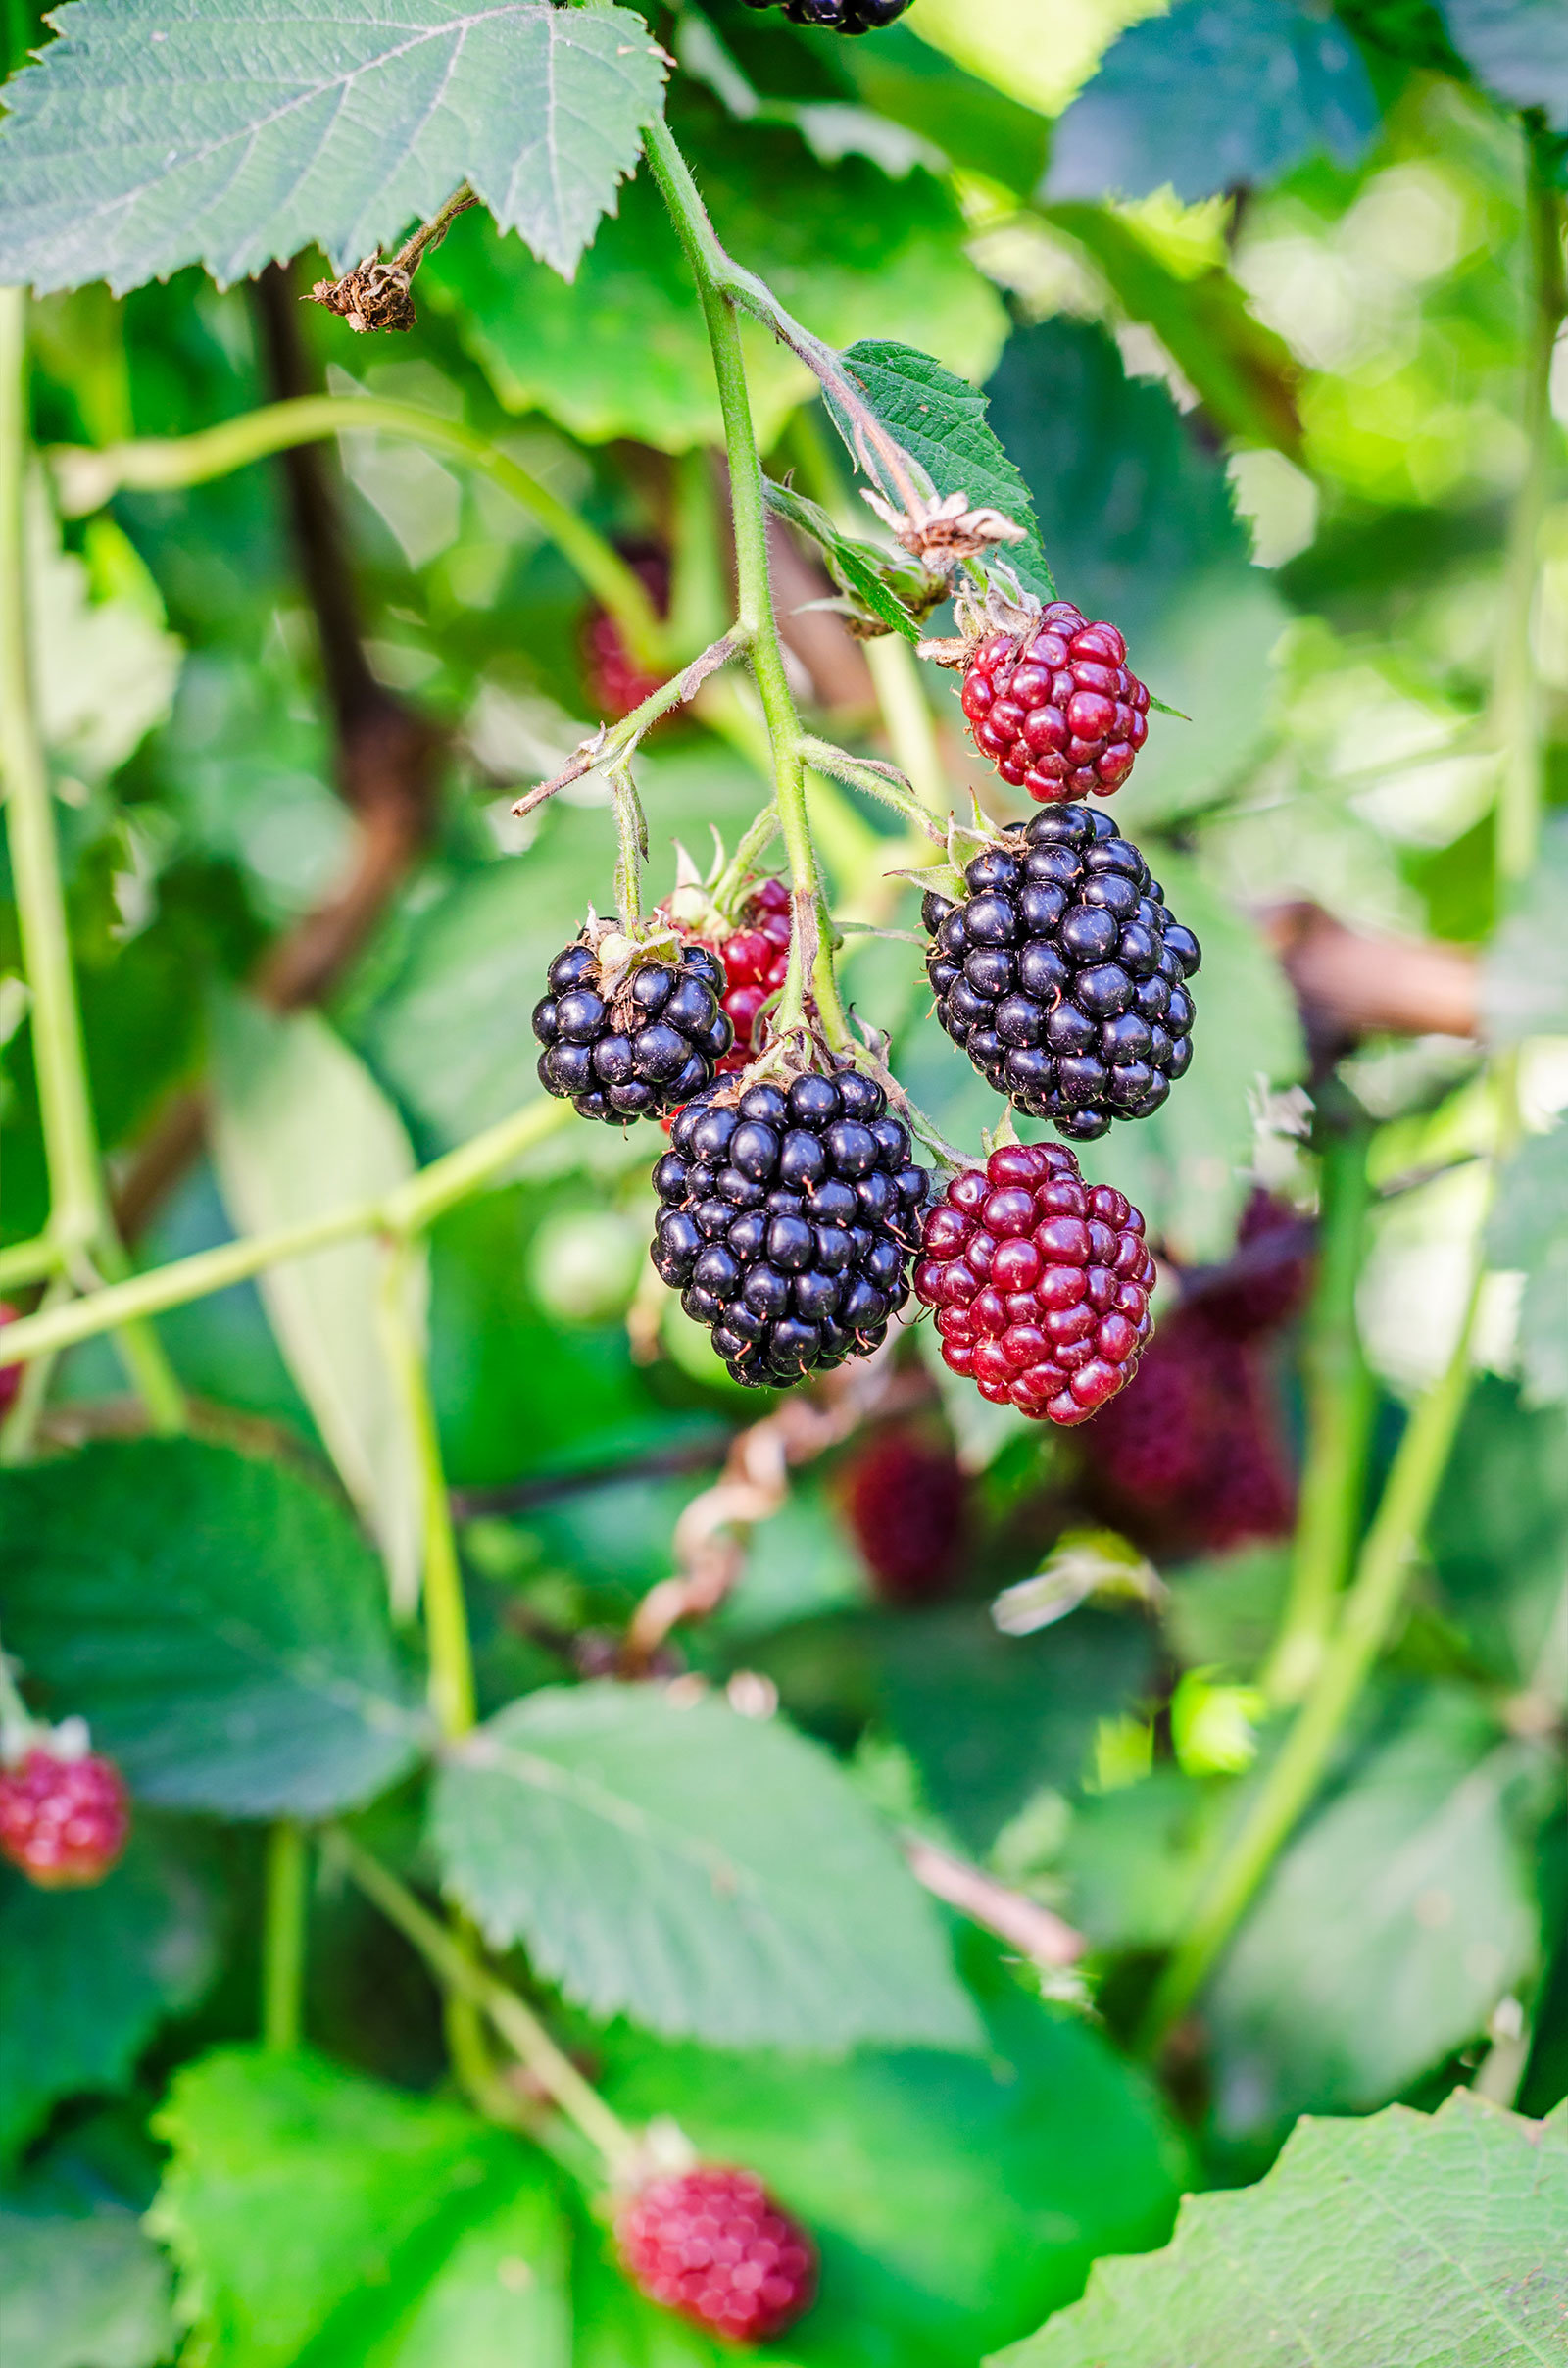 Wild Fruit: Finding Free Food in Your Neighborhood - Naturalcave.com